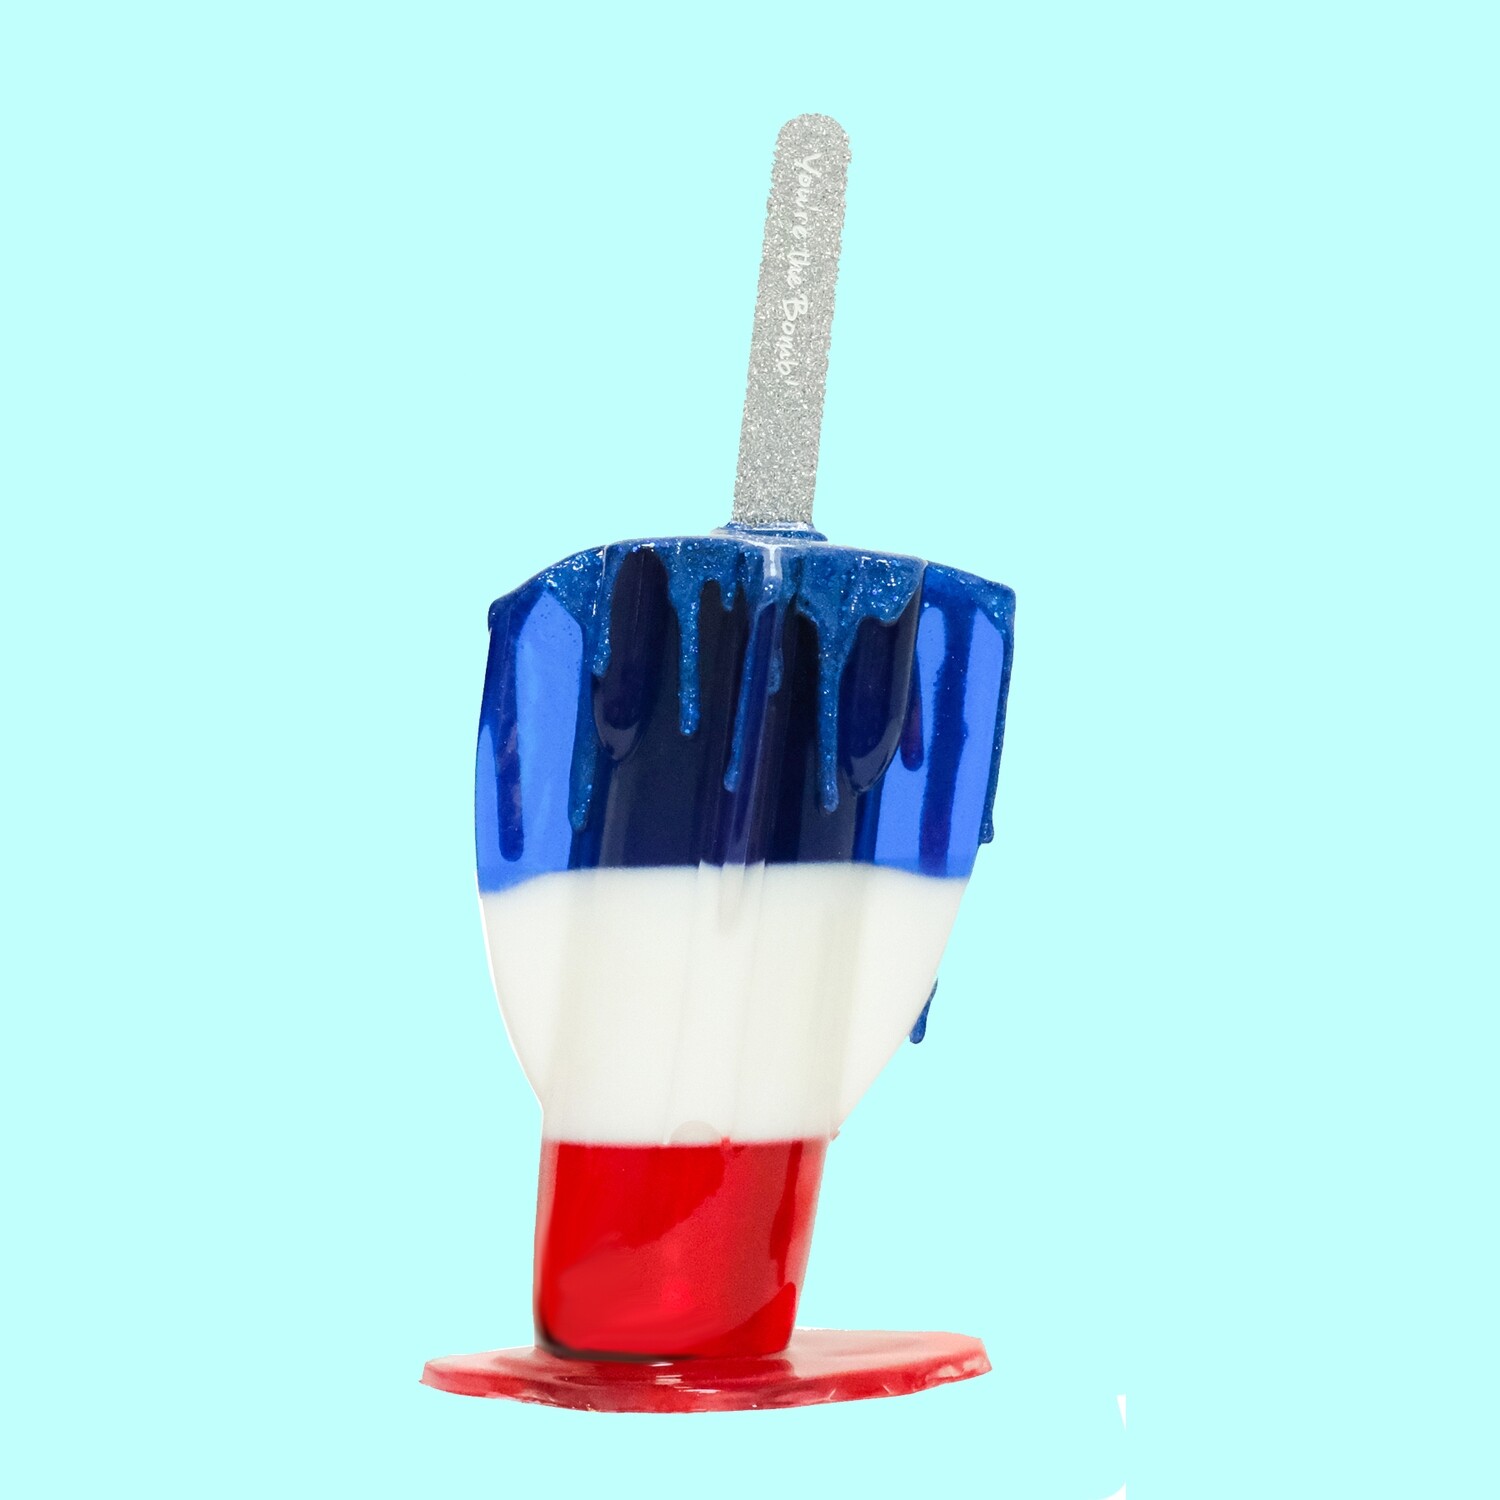 Melting Popsicle Art - You're The Bomb 12" - Limited Edition 1/10 - Original Melting Pops